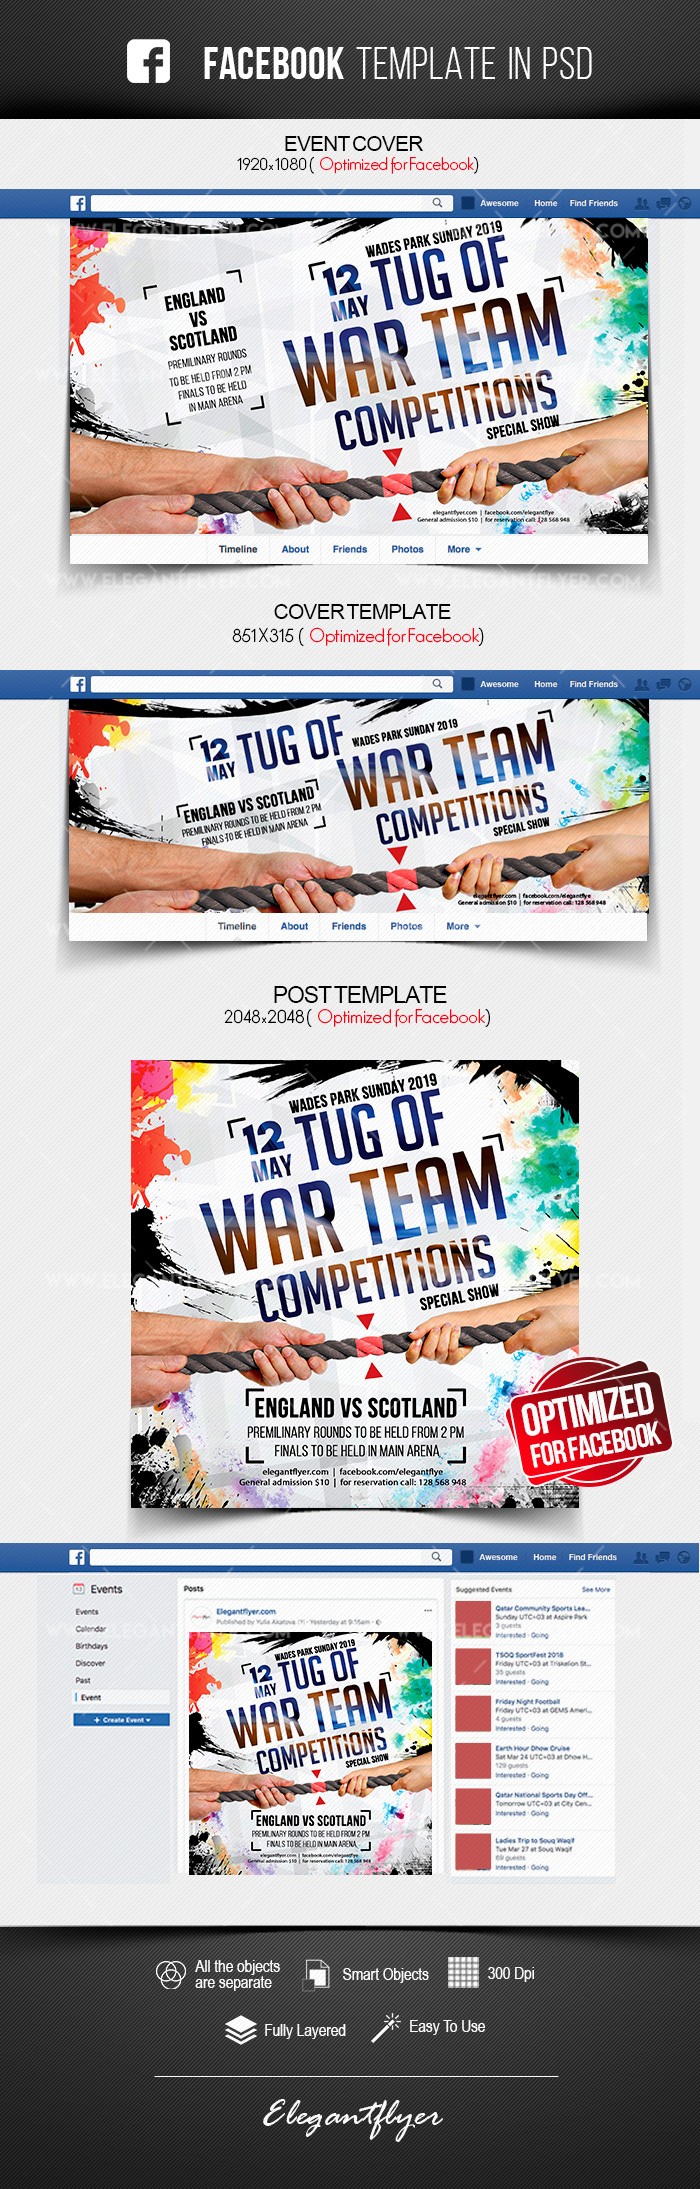 Competizioni di squadra di Tug of War su Facebook by ElegantFlyer